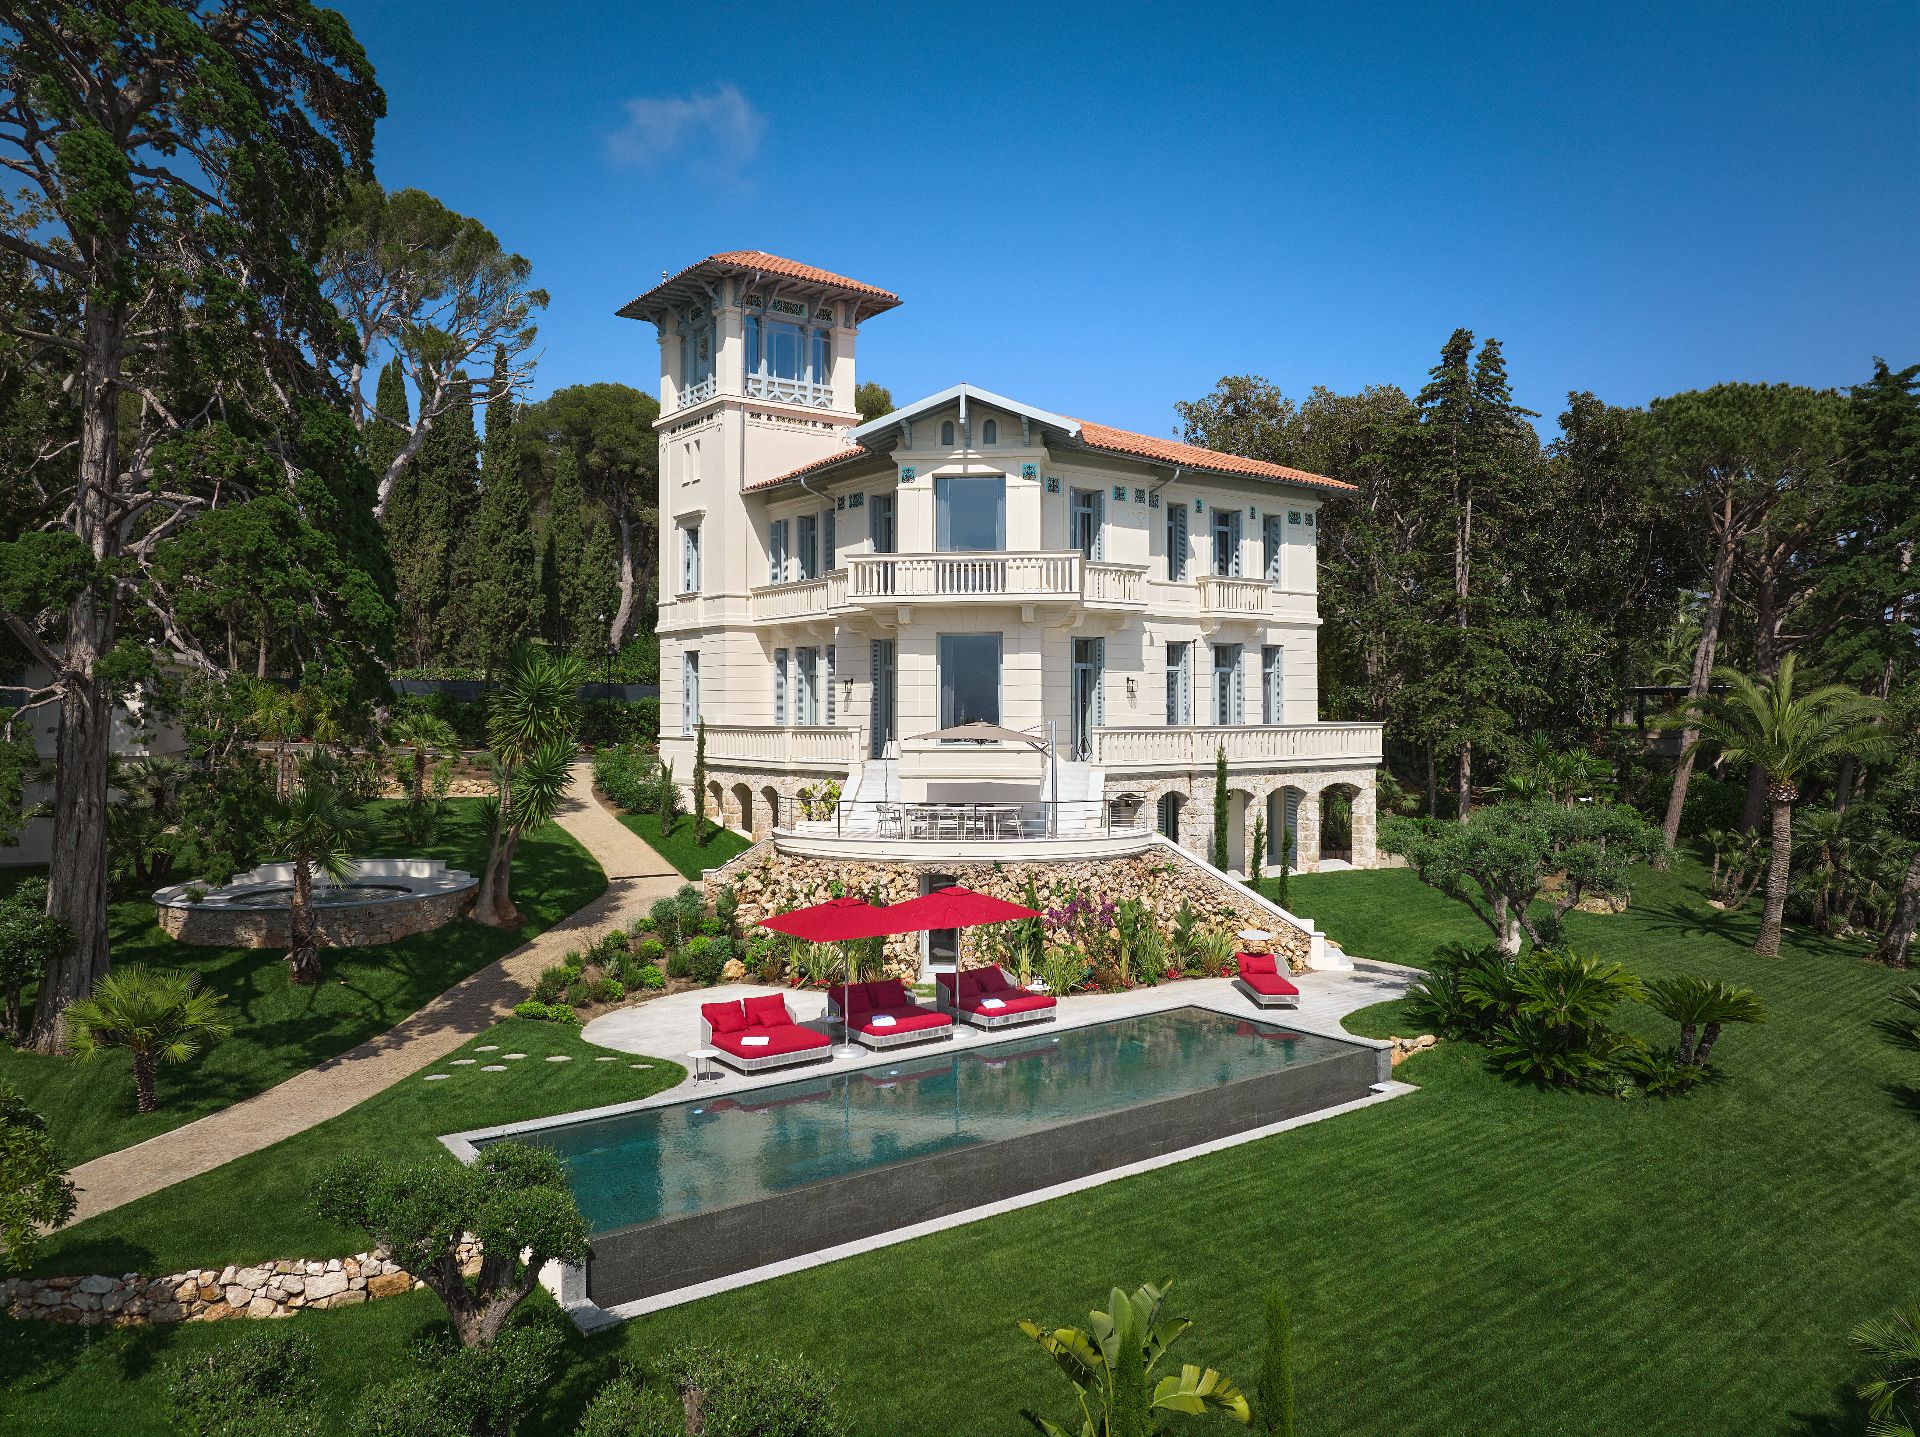 Villa St Tryphon - a 8 bedroom mansion for sale in Venice